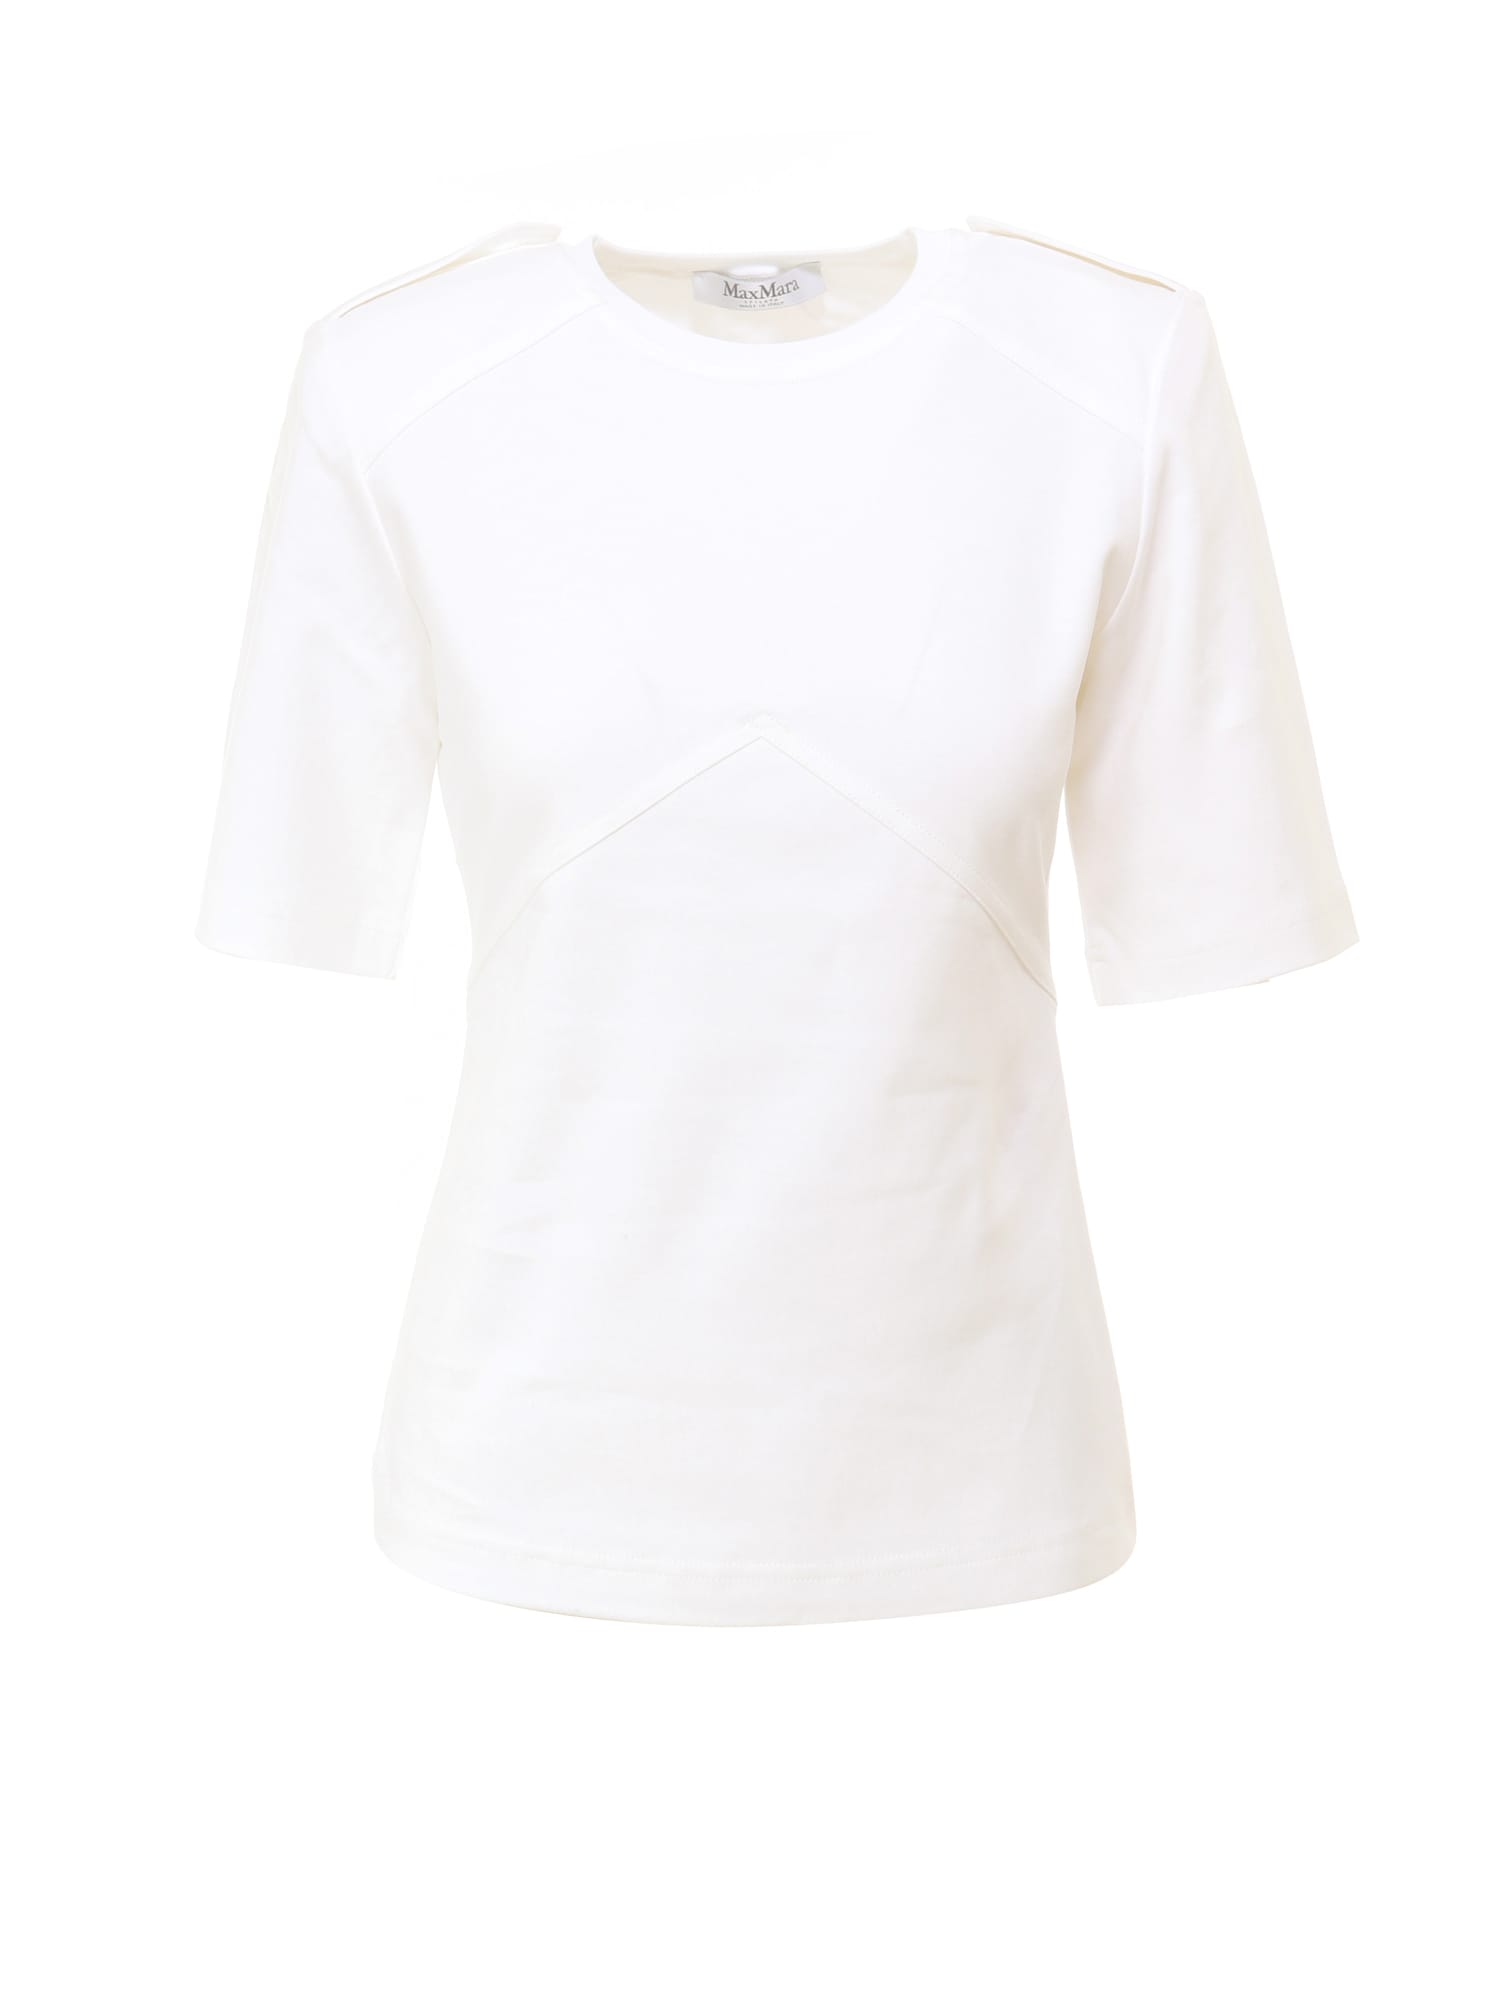 Max Mara Short Sleeve T-Shirts | italist, ALWAYS LIKE A SALE